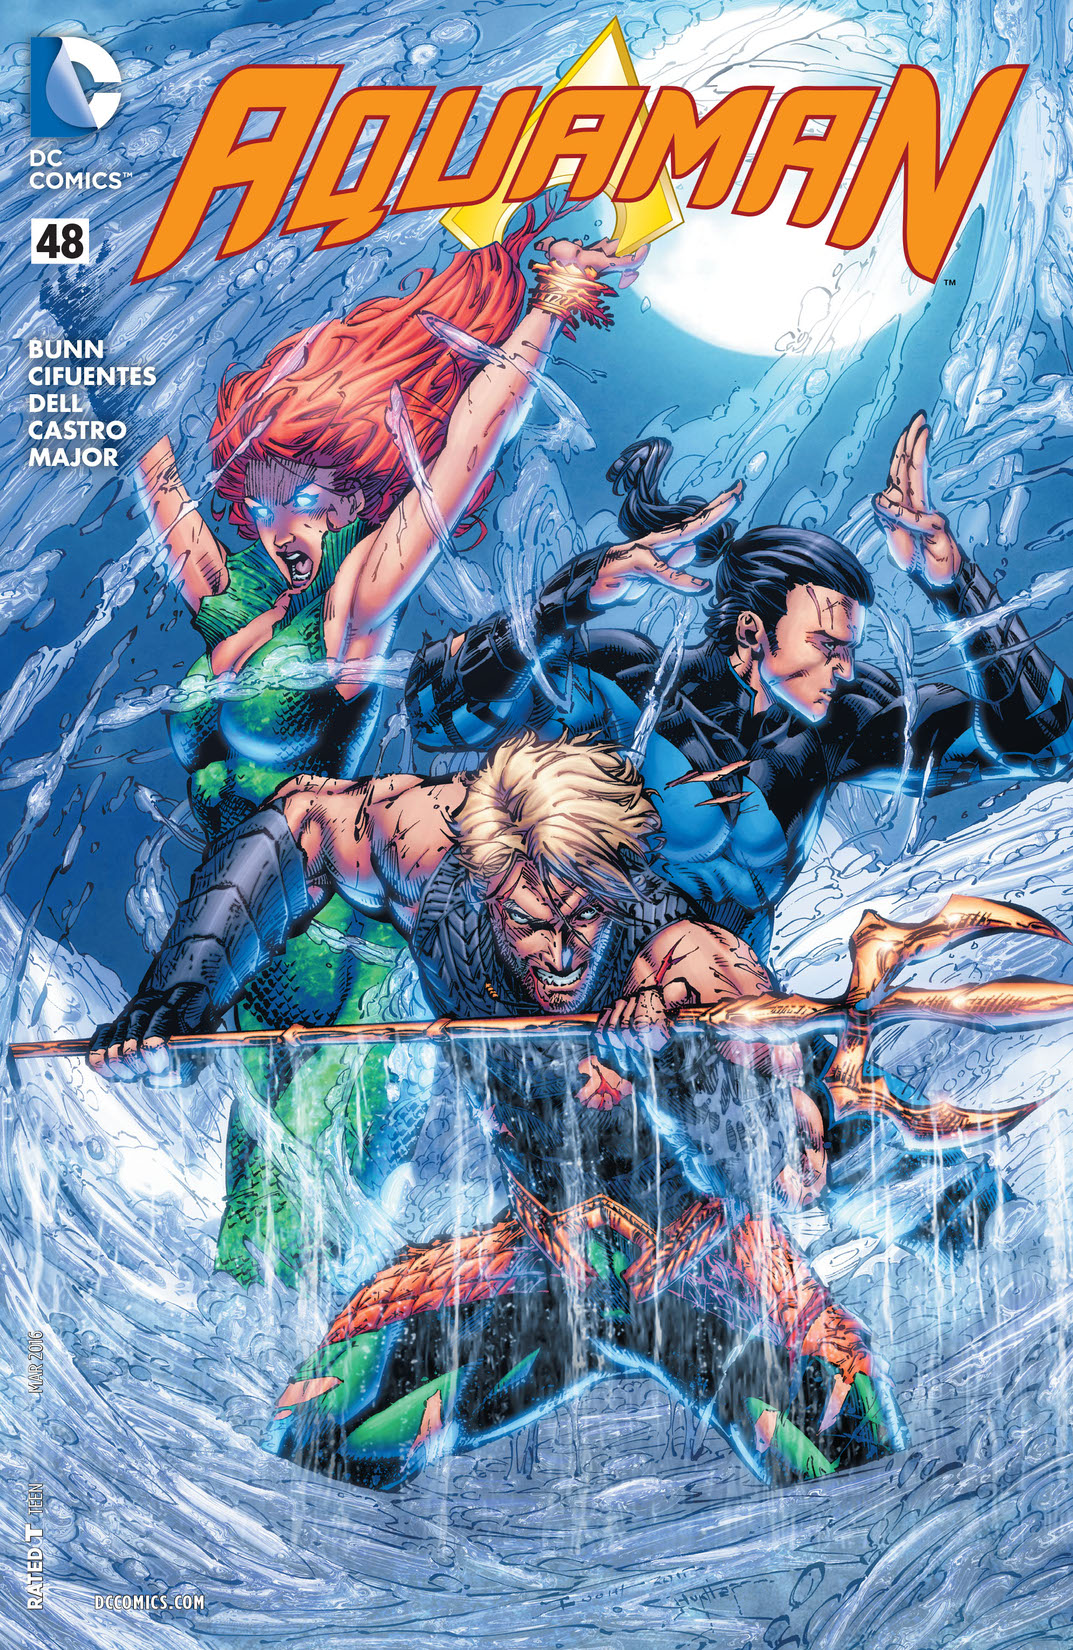 Aquaman (2011-) #48 preview images